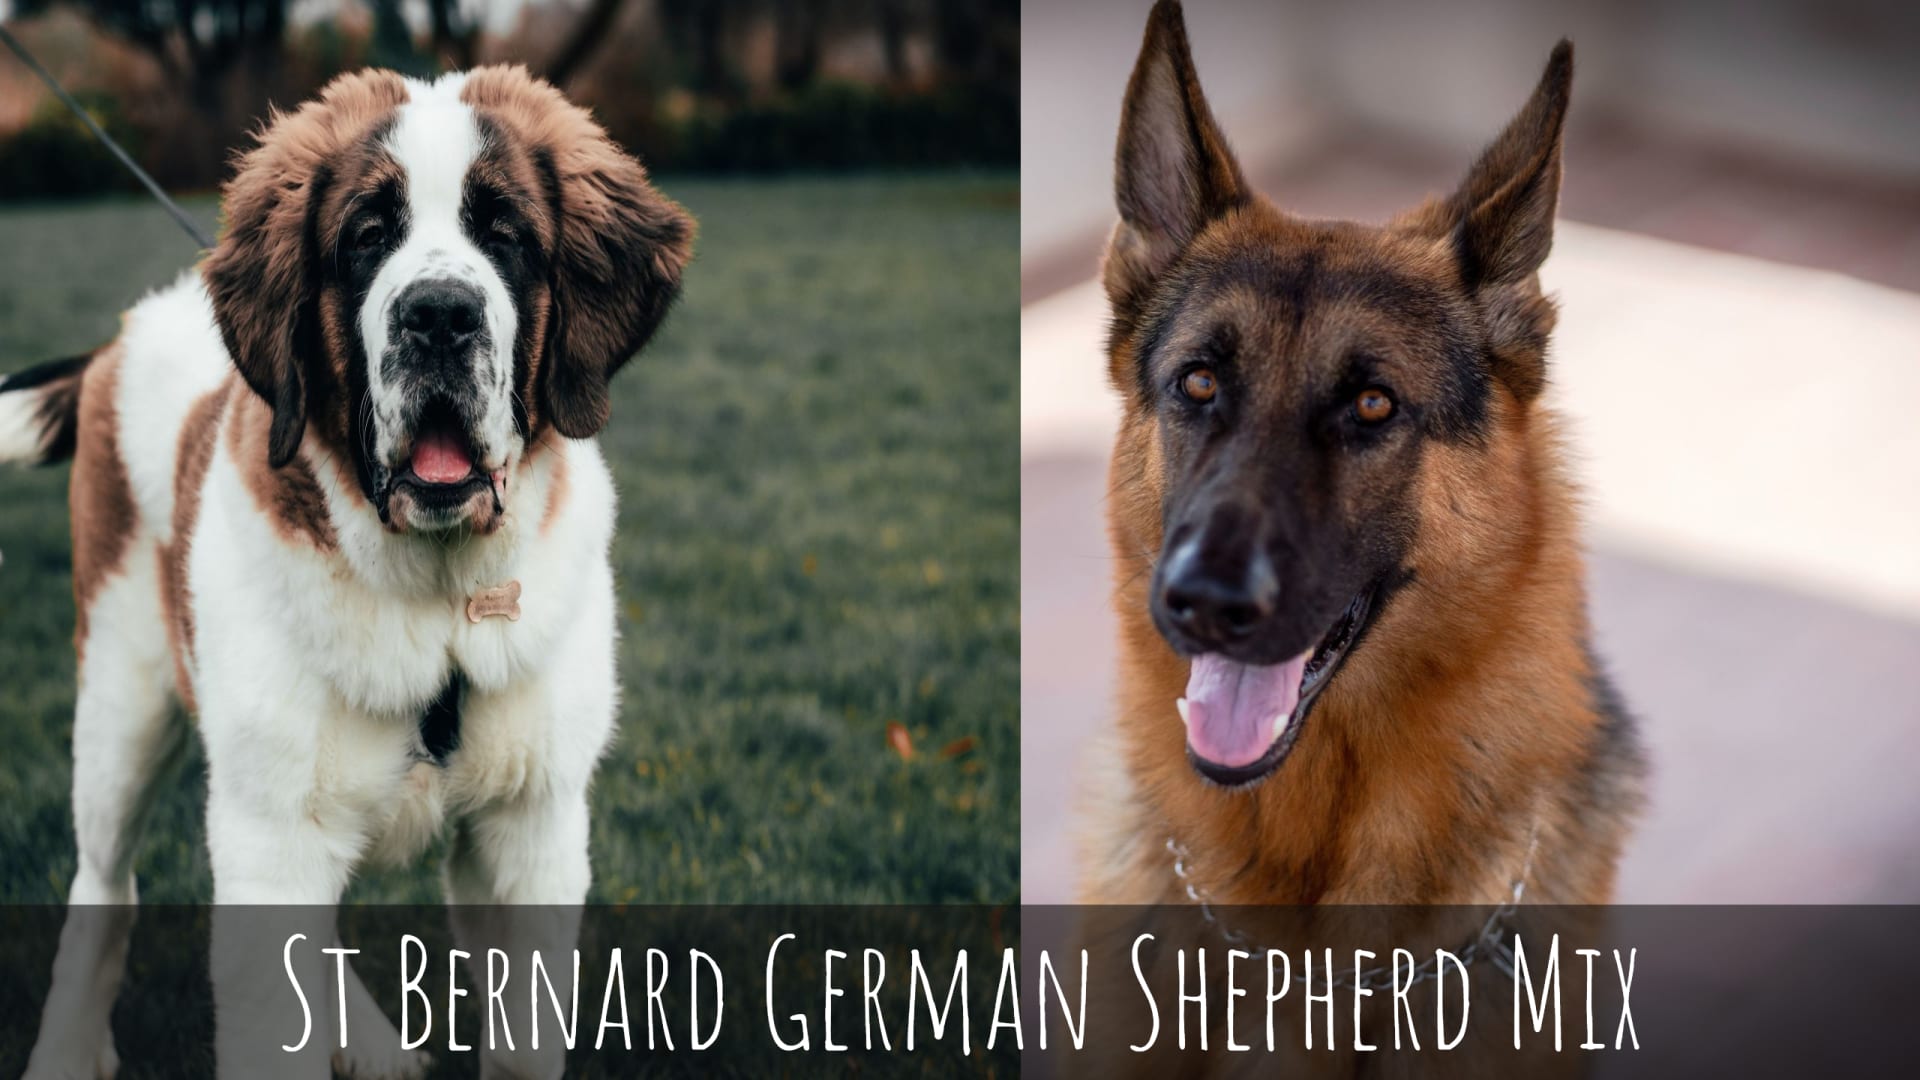 St Bernard German Shepherd Mix